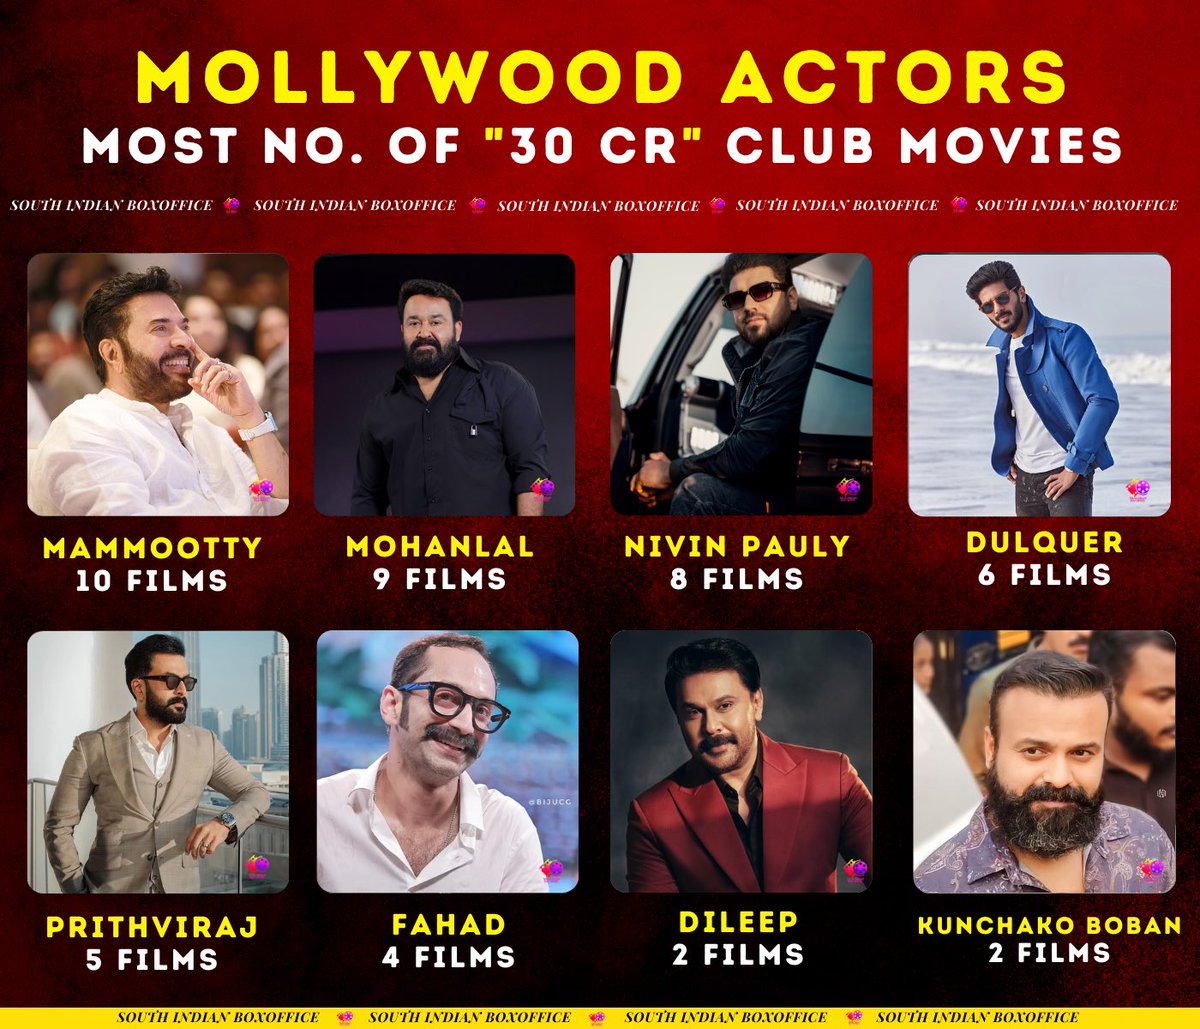 Mollywood Actors Having Most 30 Cr Club Movies Worldwide 

1 #Mammootty : 10
2 #Mohanlal : 9
3 #Nivin : 8 
4 #Dulquer : 6
5 #Prithviraj : 5
6 #Fahad : 4
7 #Dileep : 2
8 #KunchakoBoban : 2
9 #Pranav : 2
10 #JayaSuriya : 2